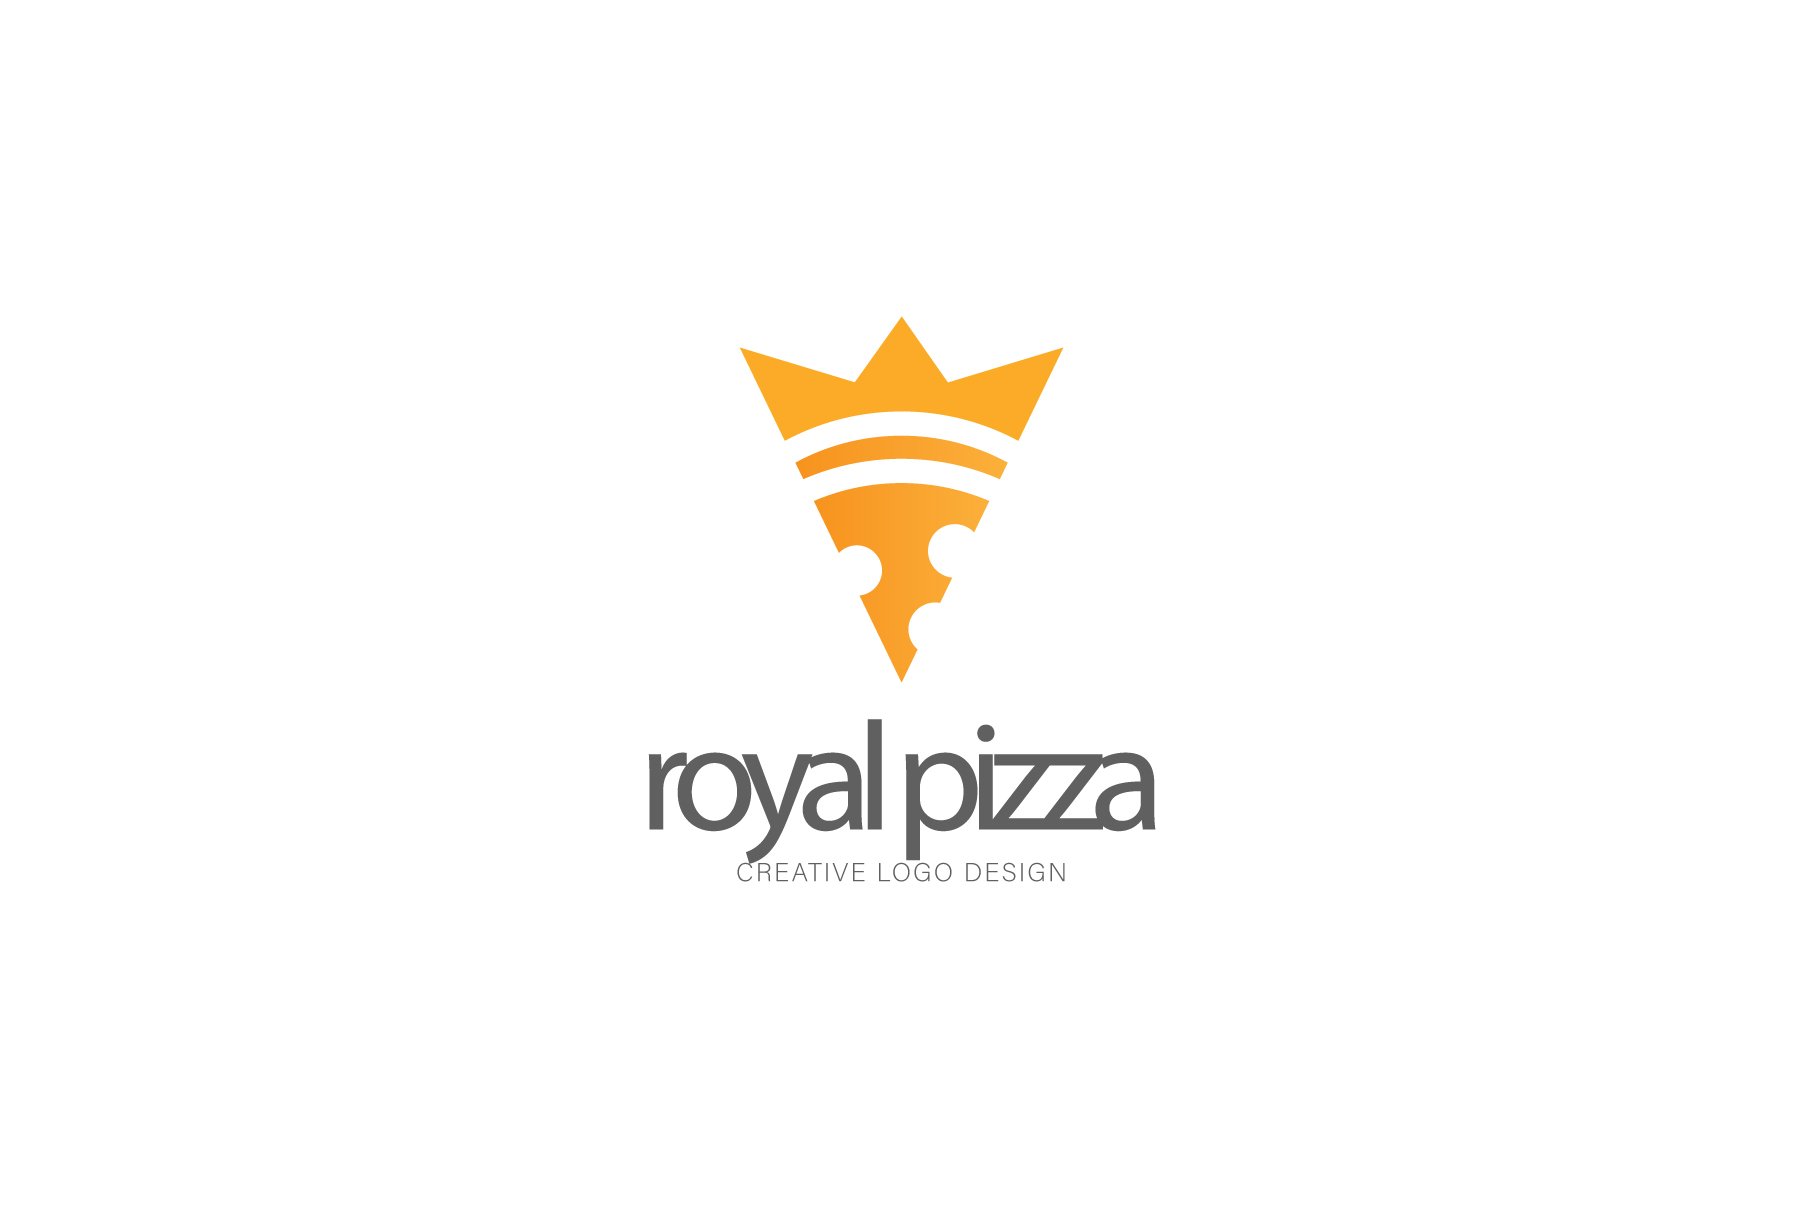 royal pizza logo preview image.